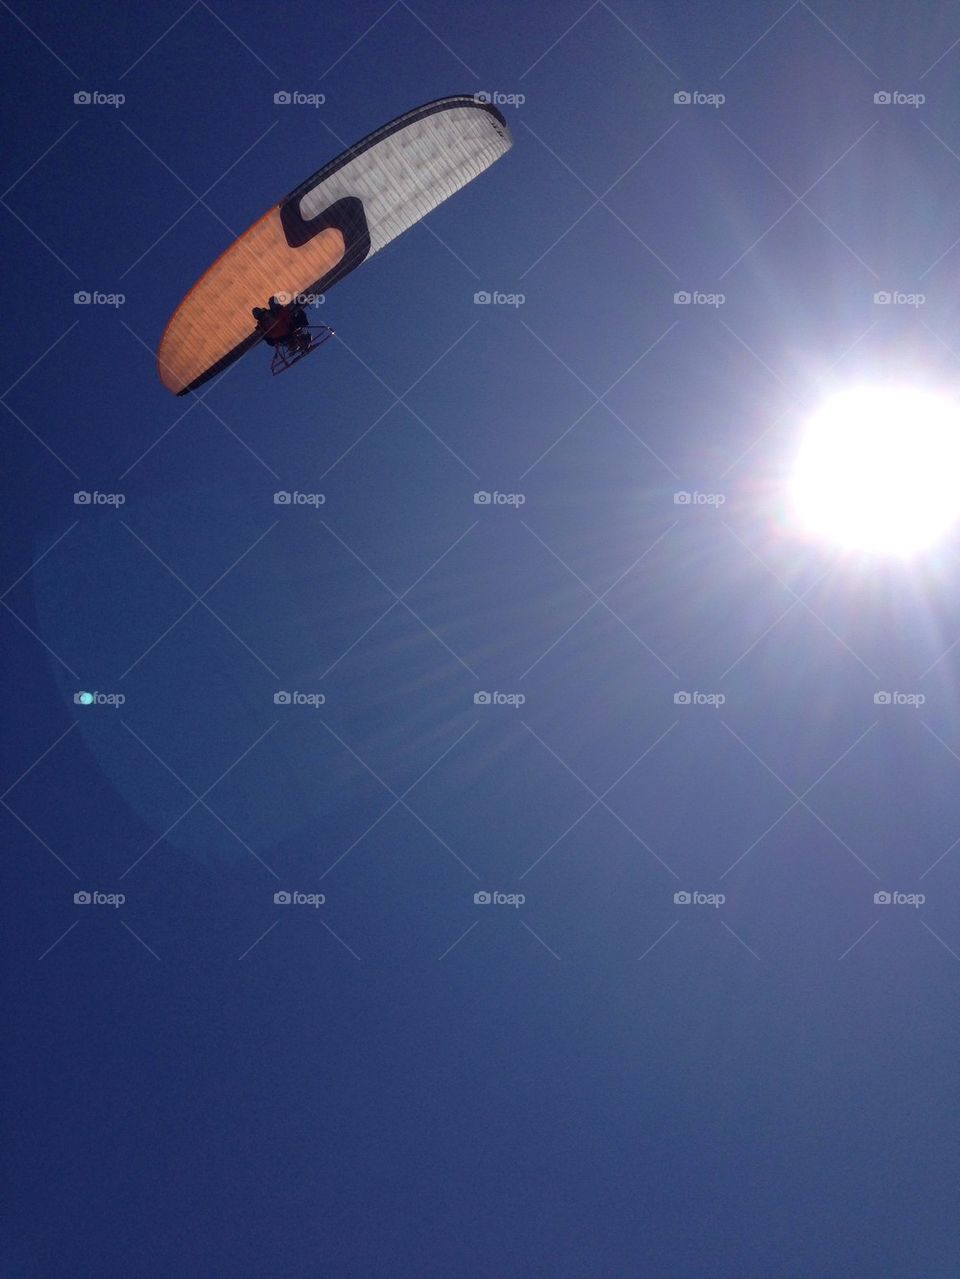 Propeller driven kite. Florida